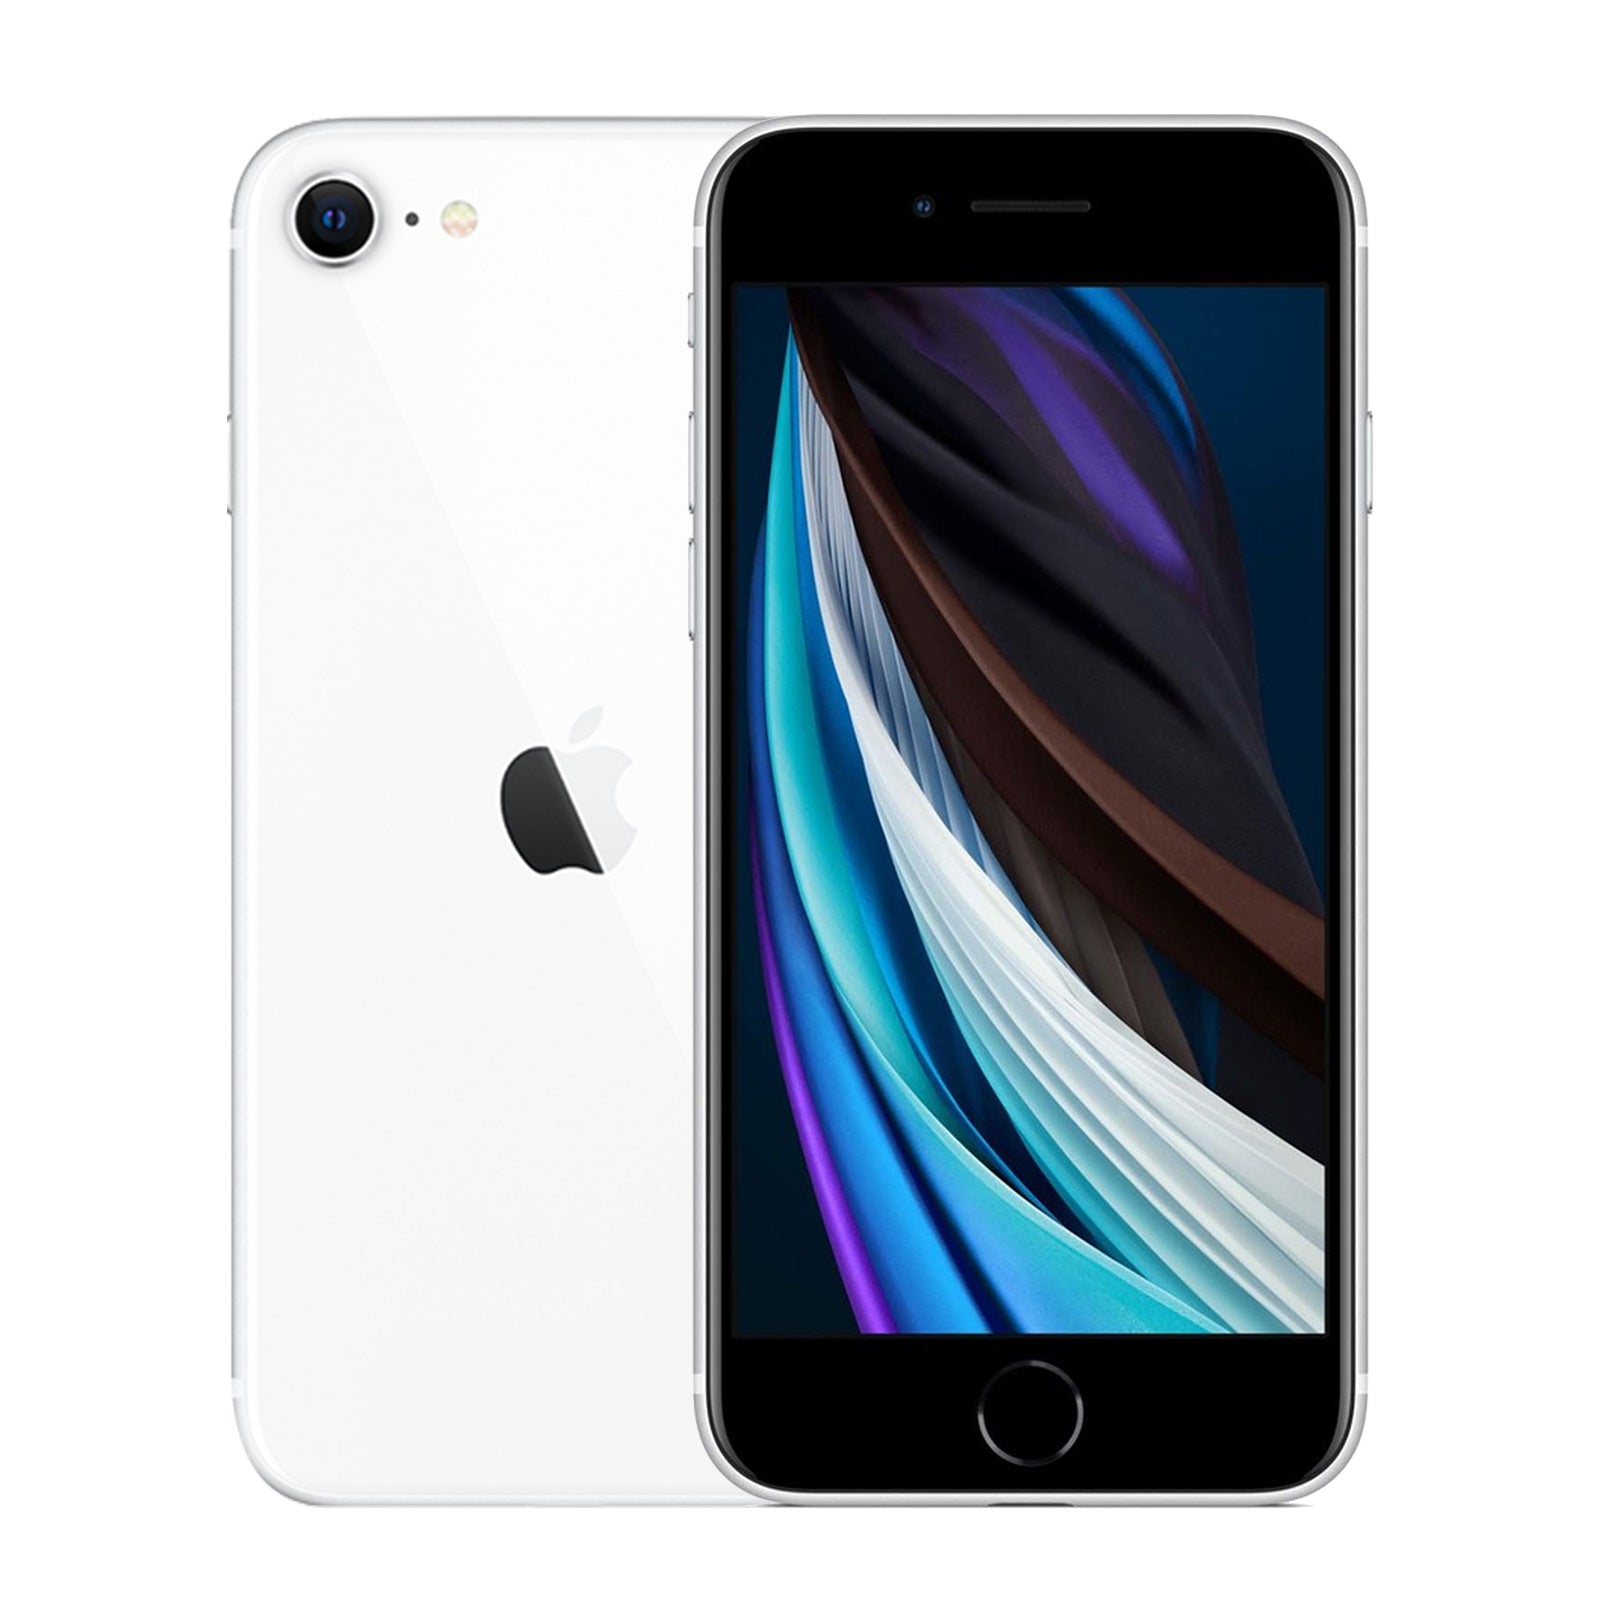 Apple iPhone 8 Plus 64GB Verizon Smartphone